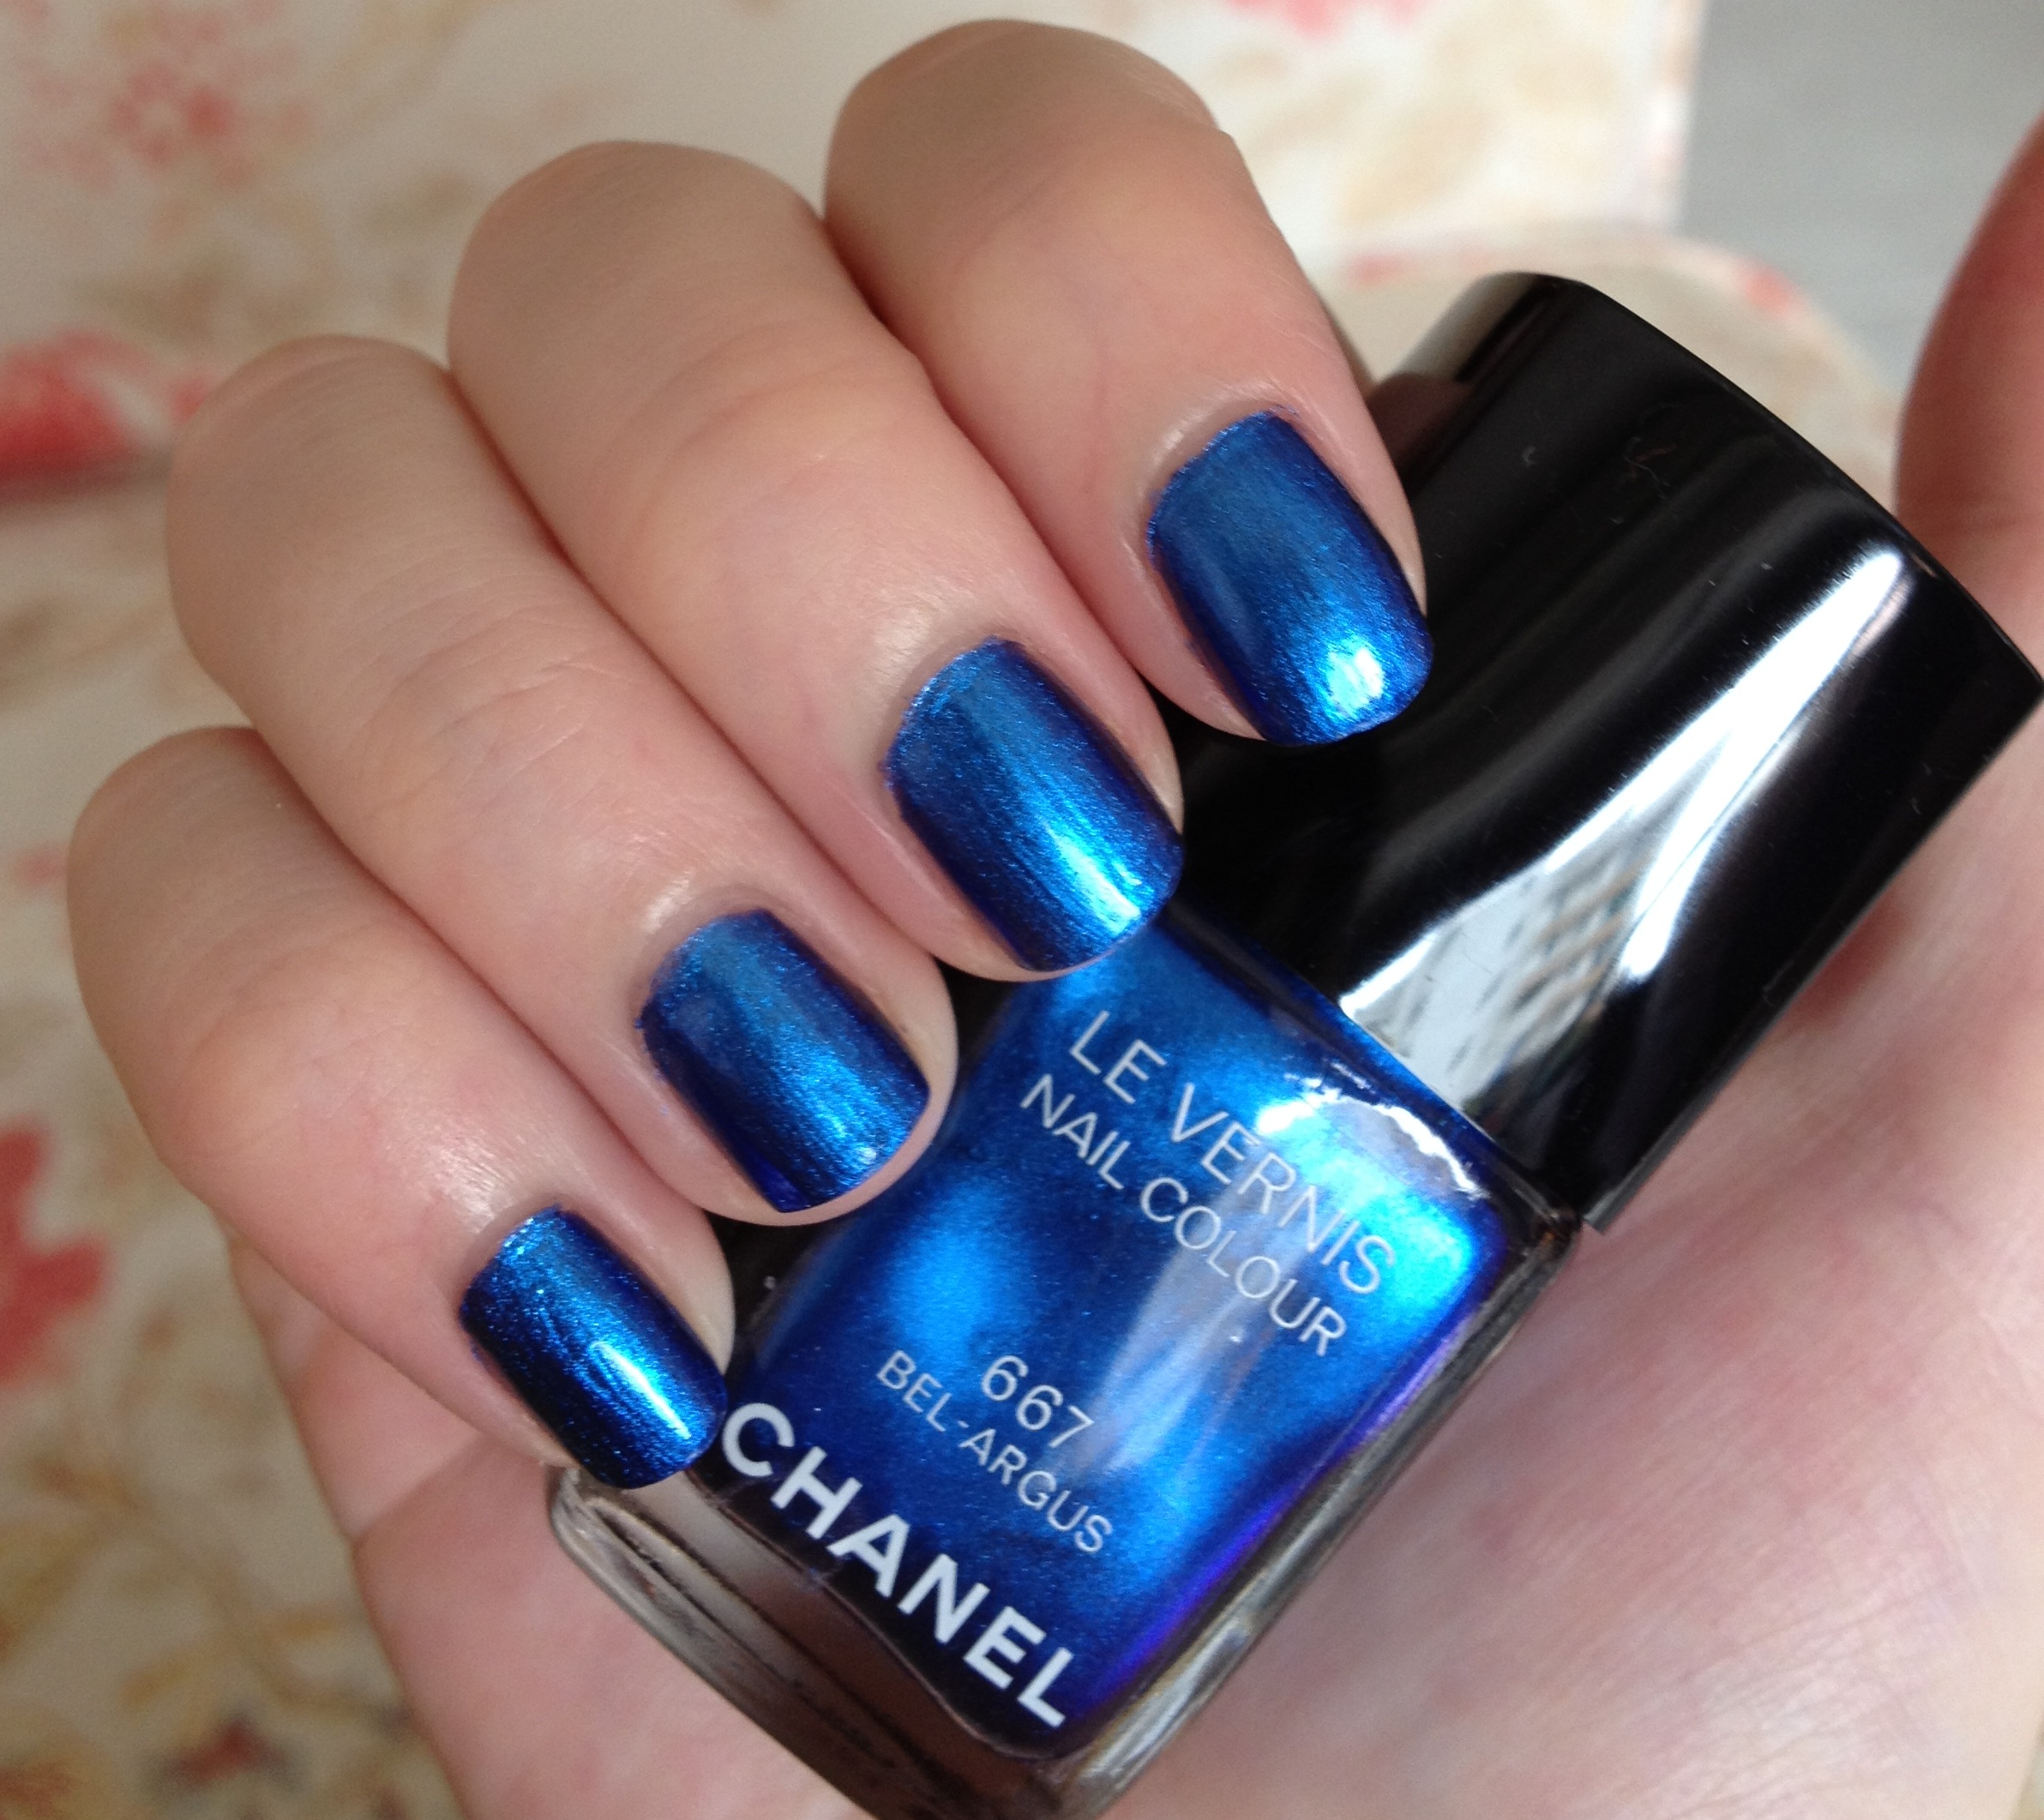 Chanel Bel Argus nail polish review